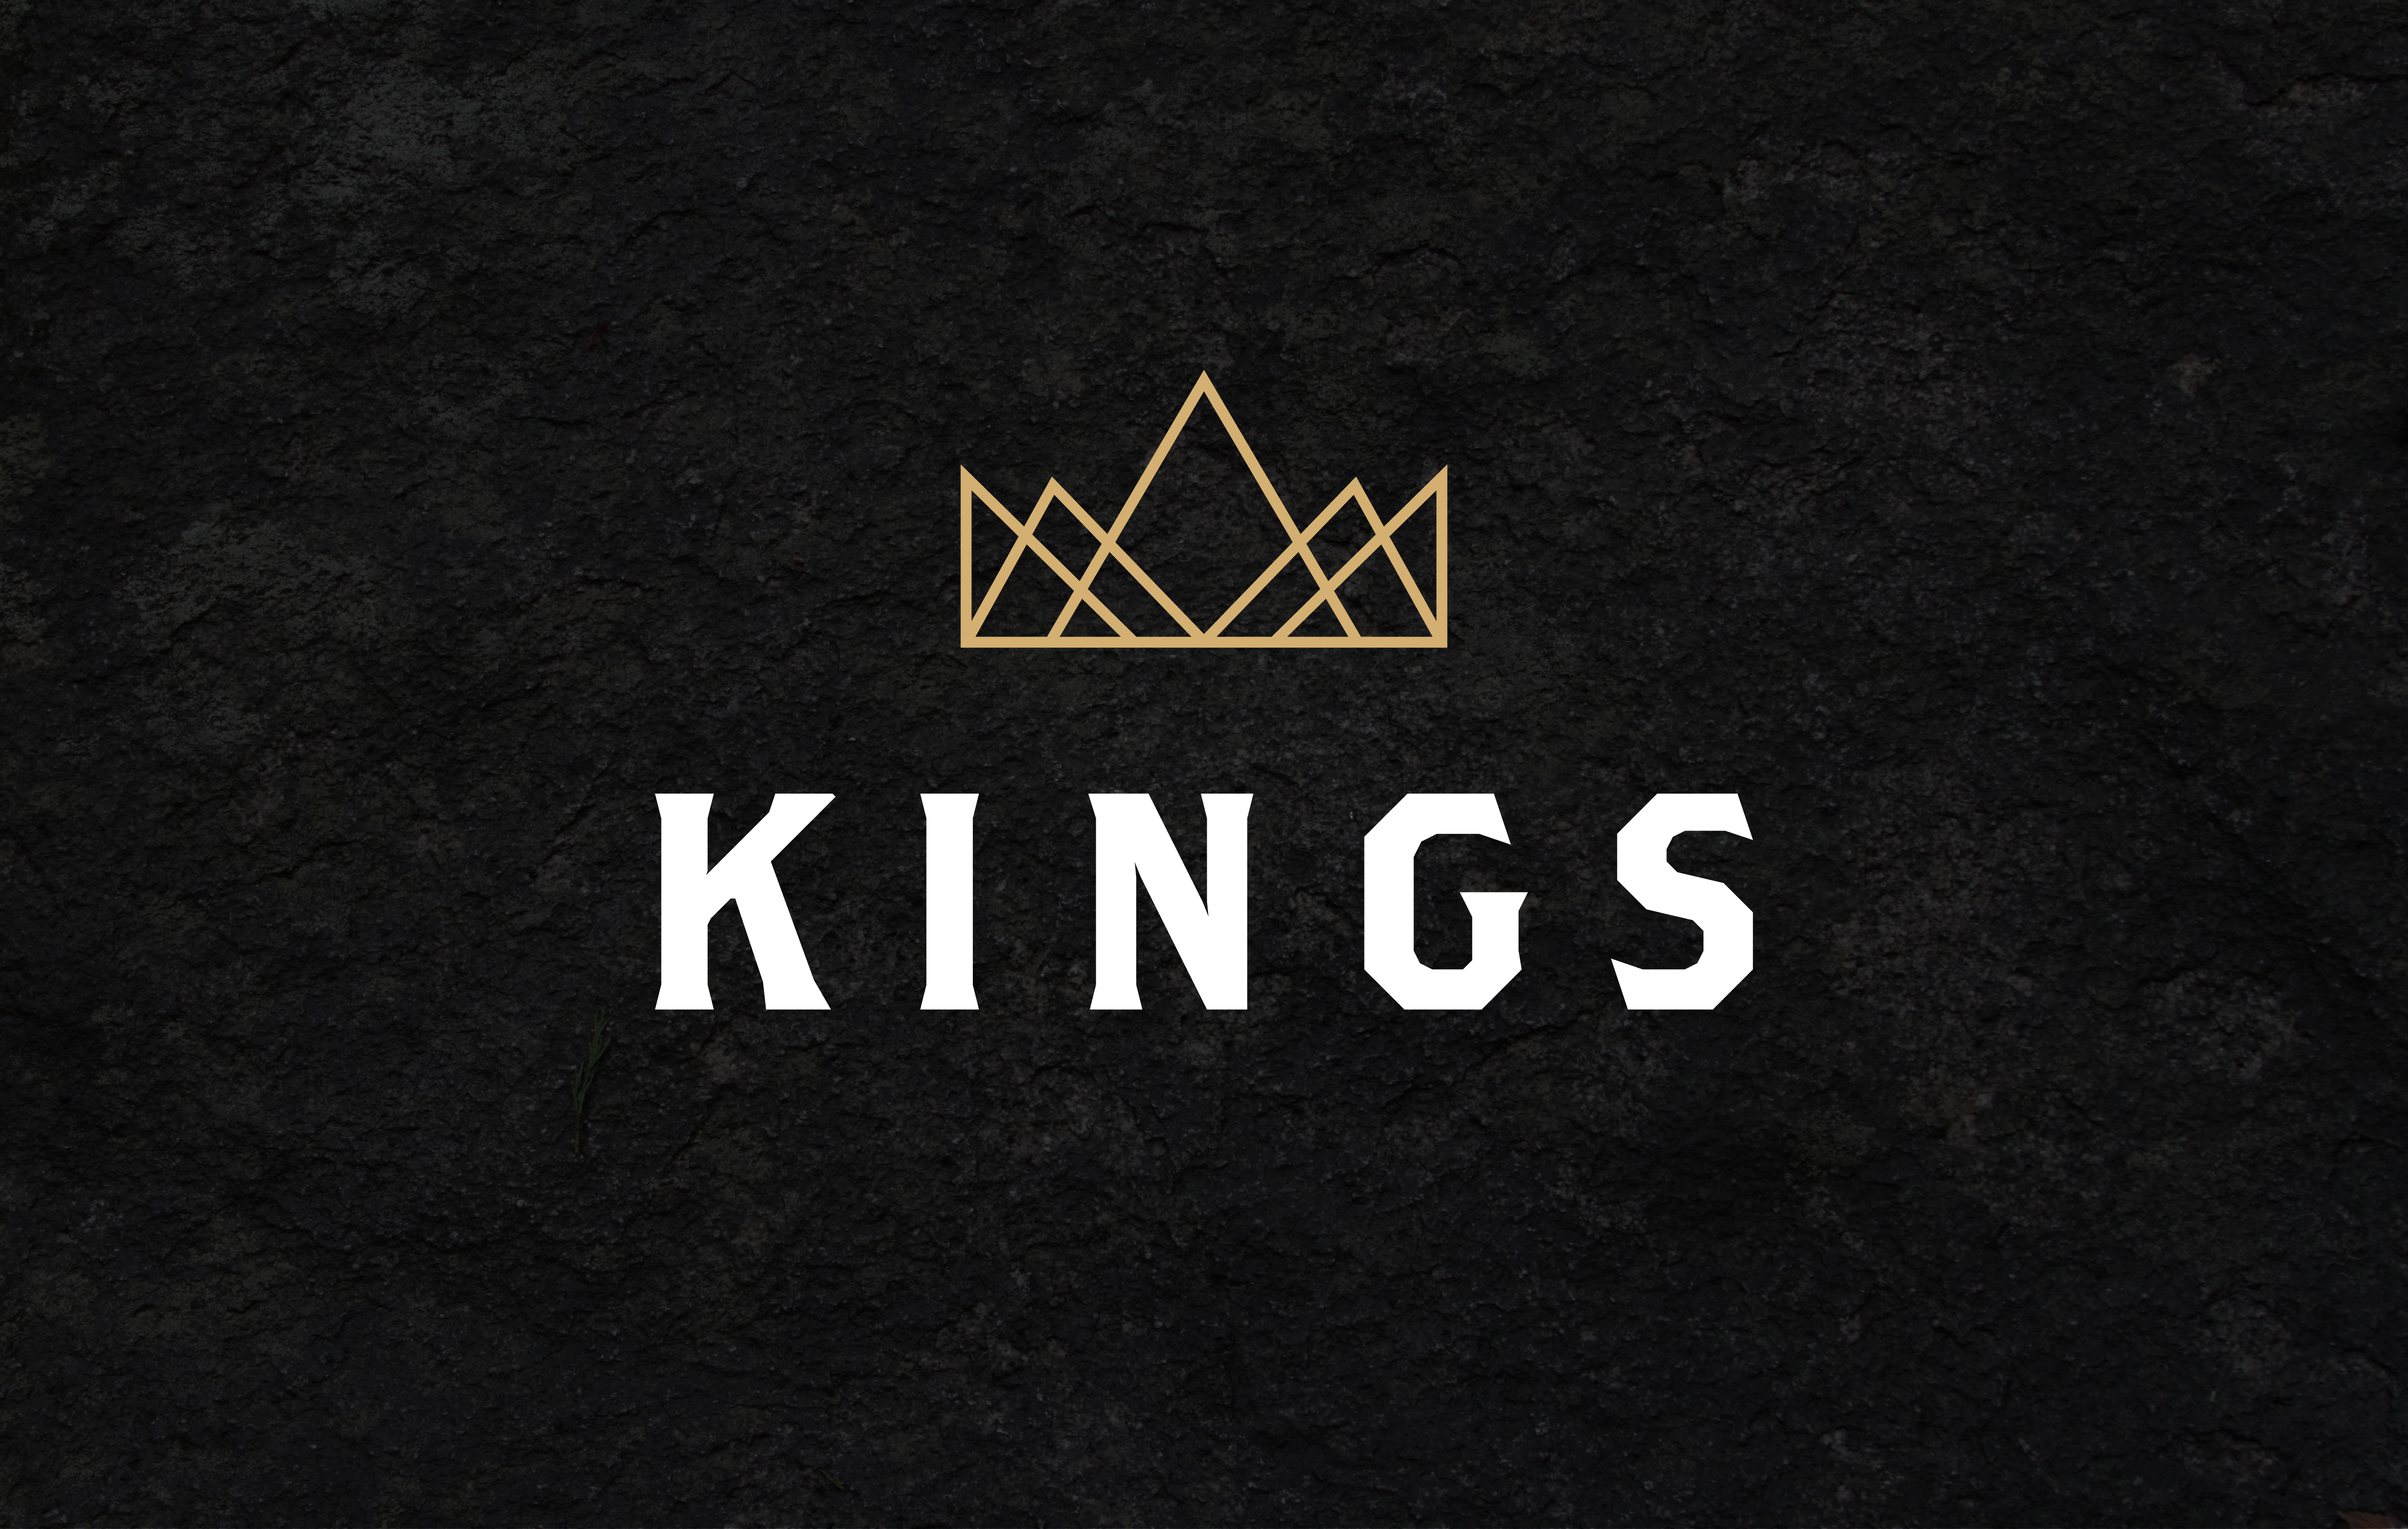 Kings – Saul